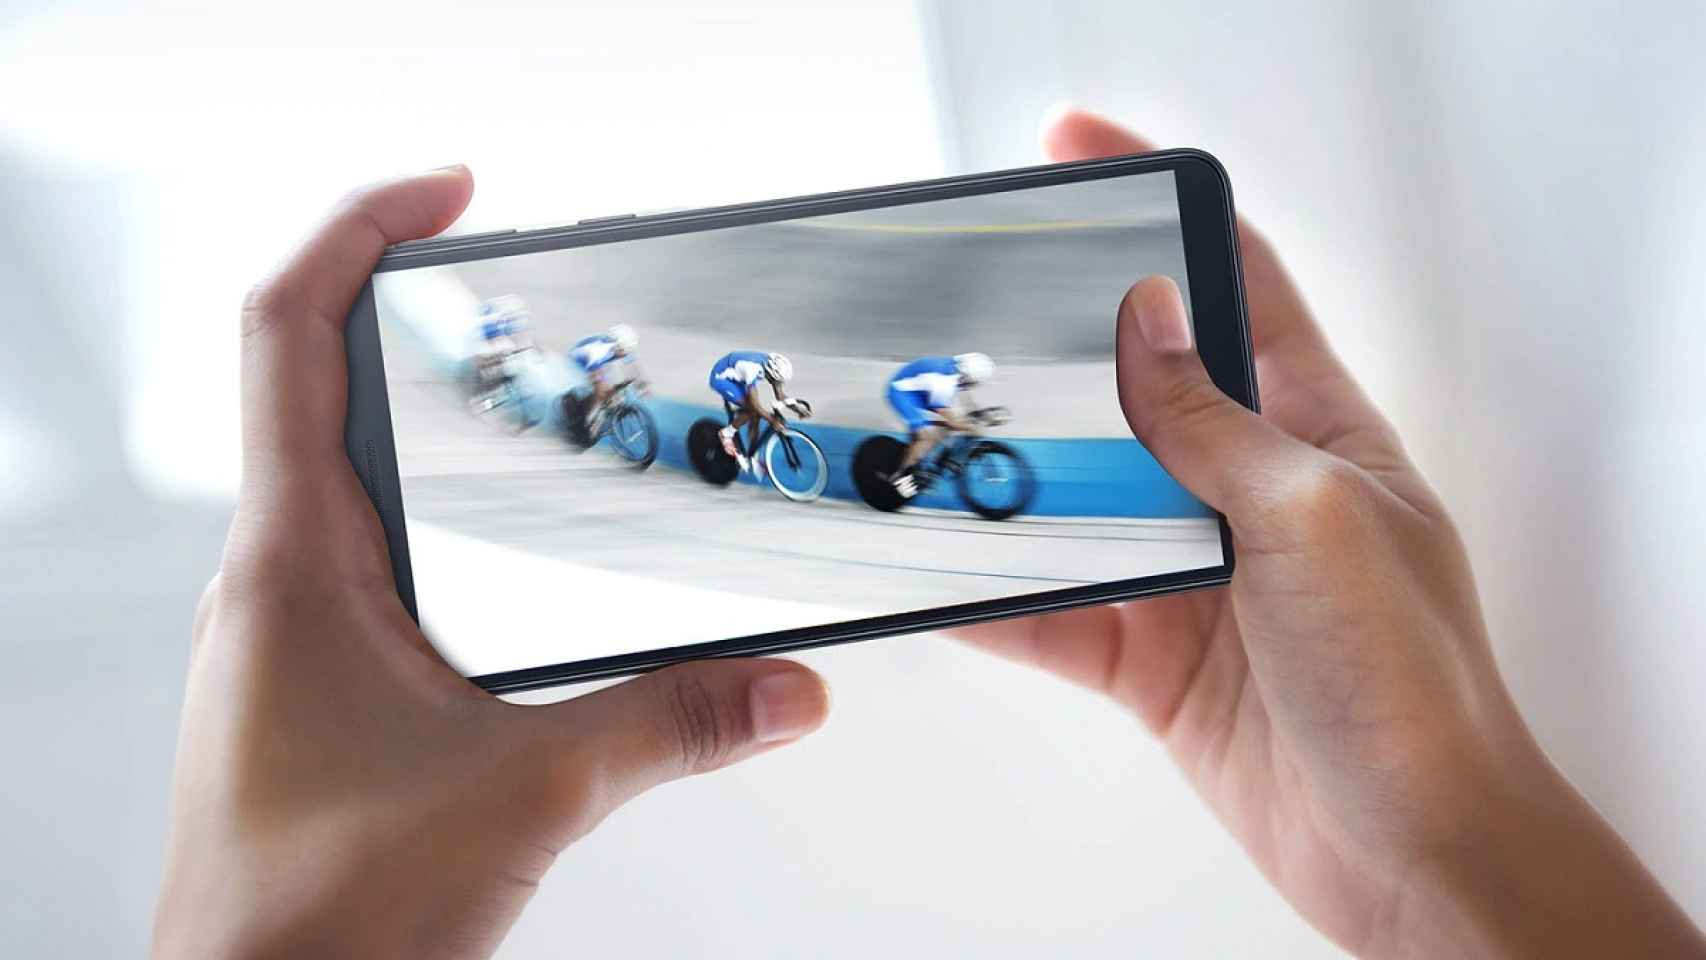 Nuevo Samsung Galaxy A3 Core: un móvil ultrabarato con Android Go